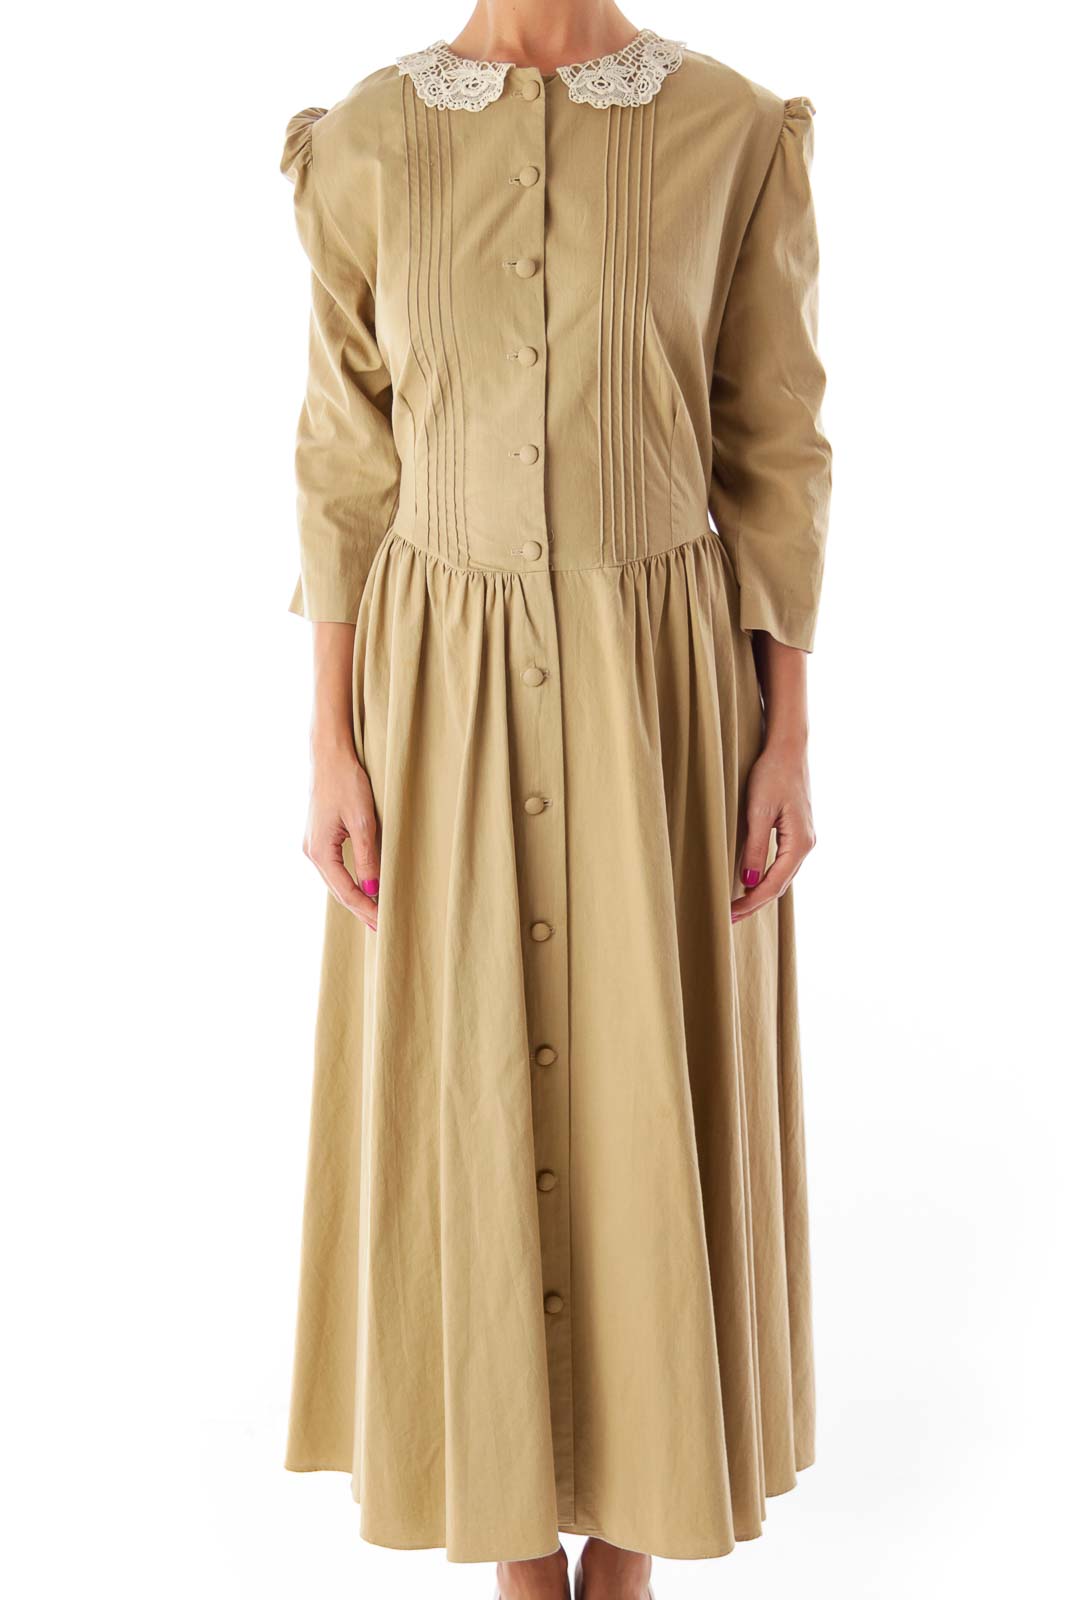 Brown Vintage Lace Details Dress Front